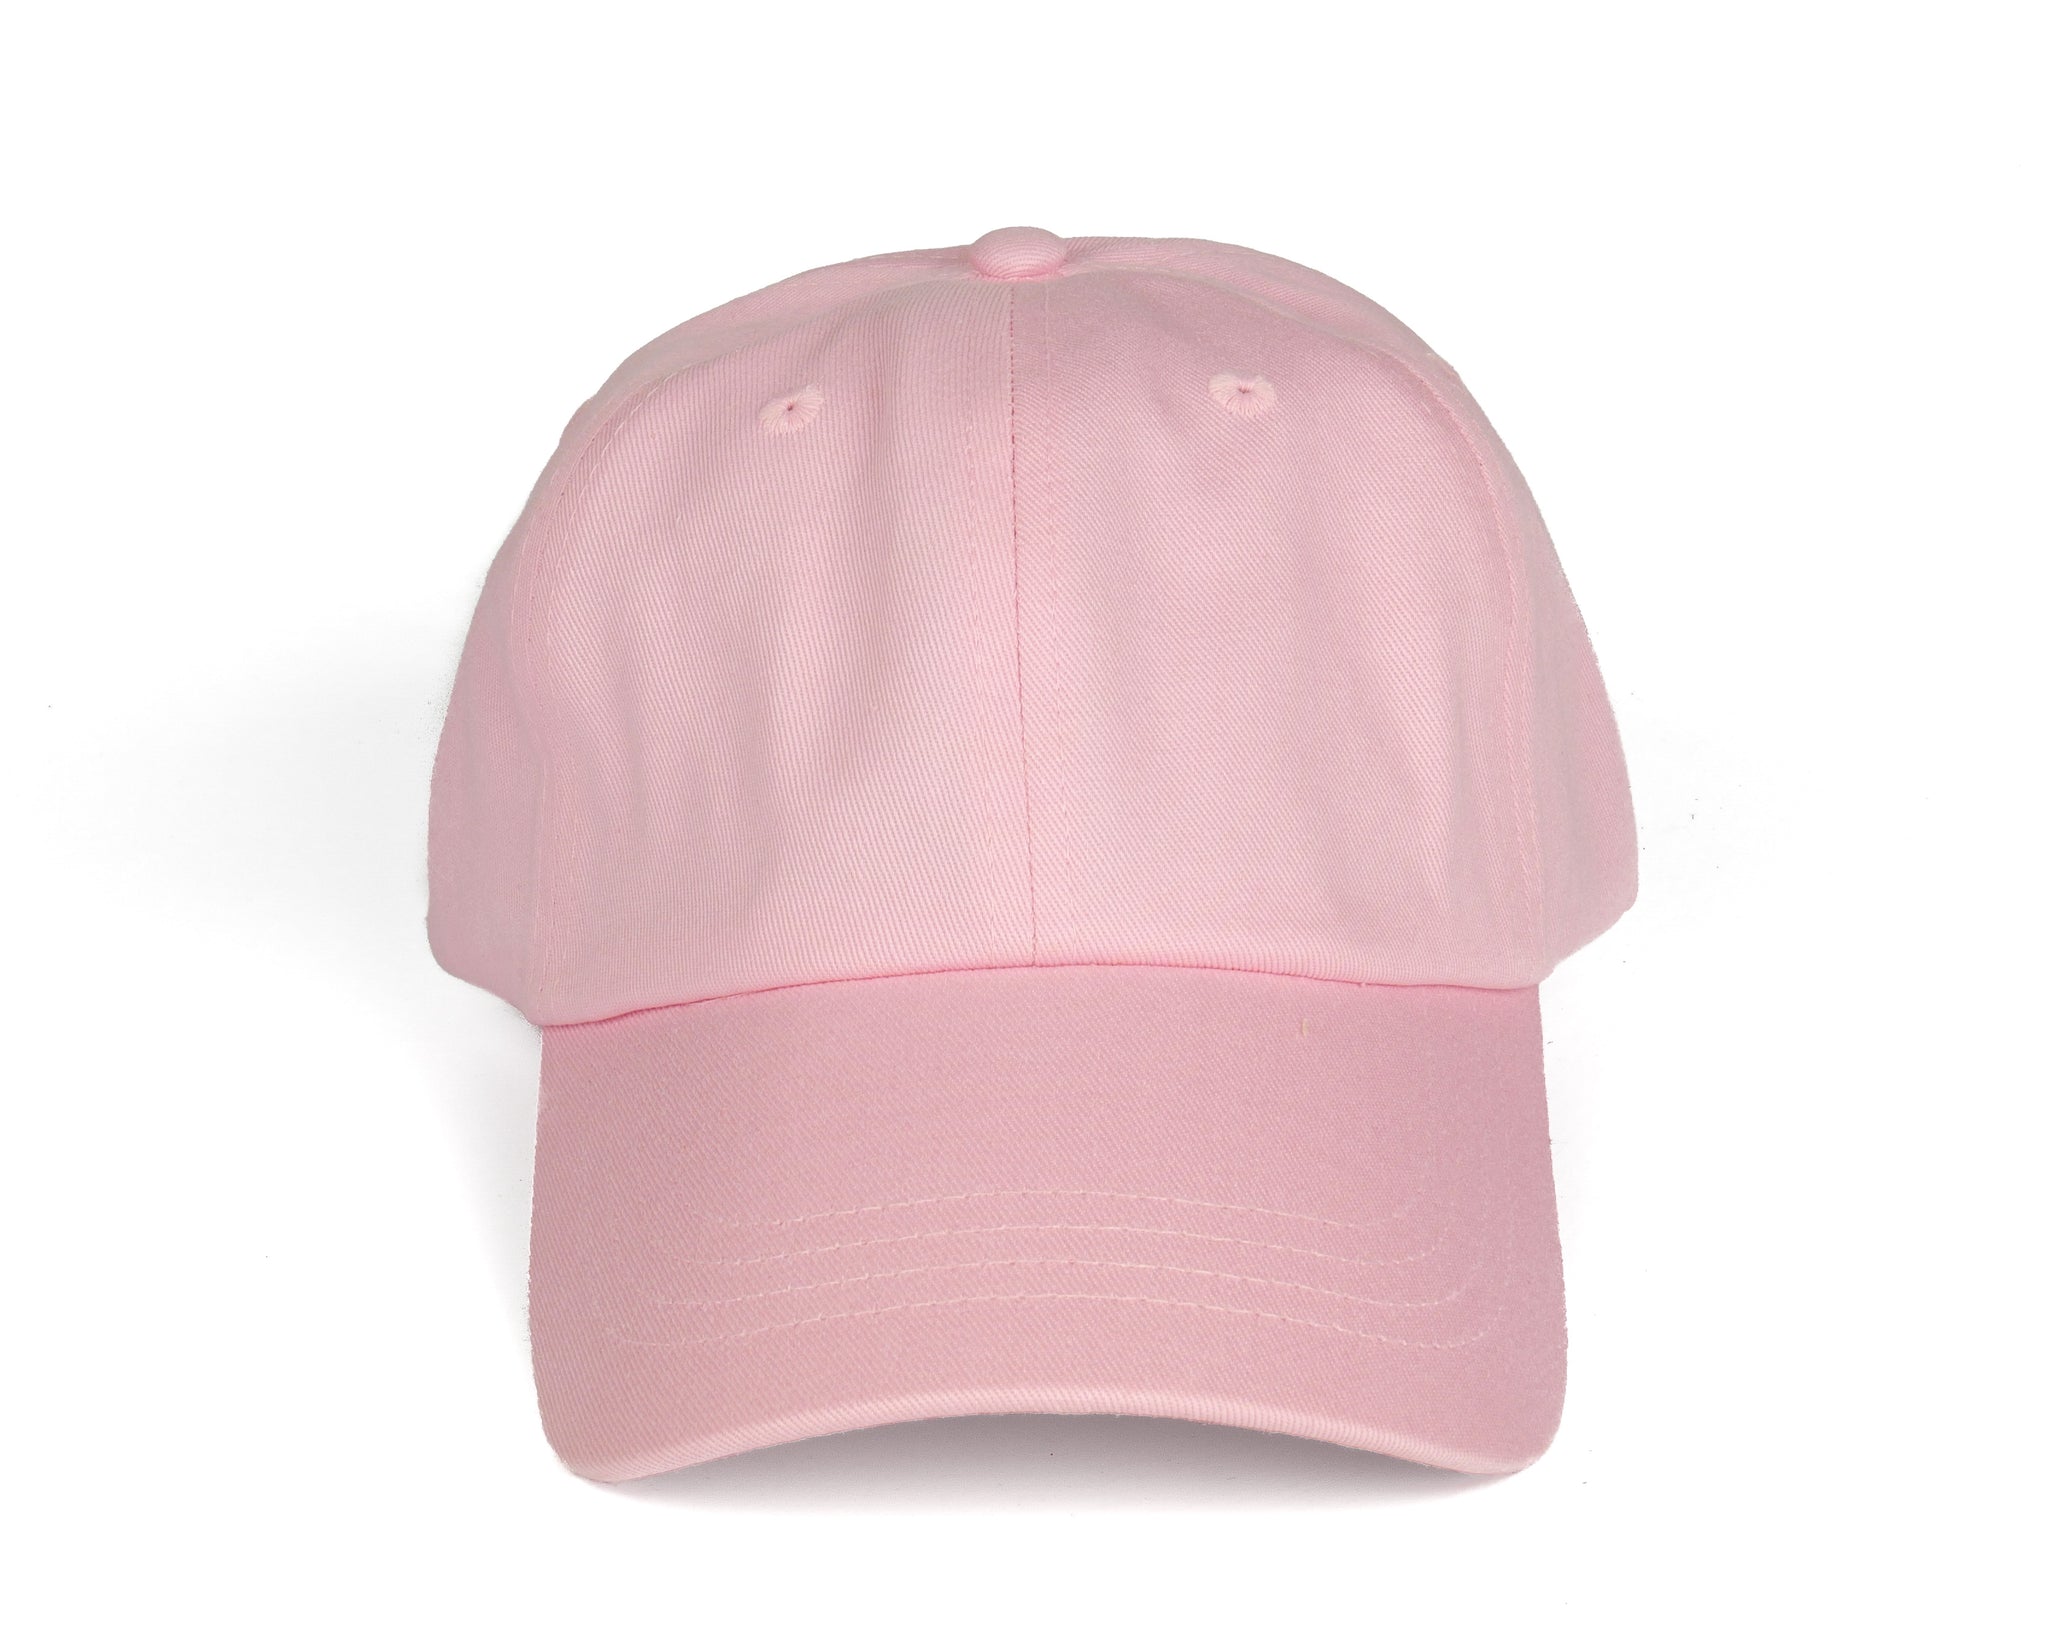 The Pops - 100% Cotton - Light Pink